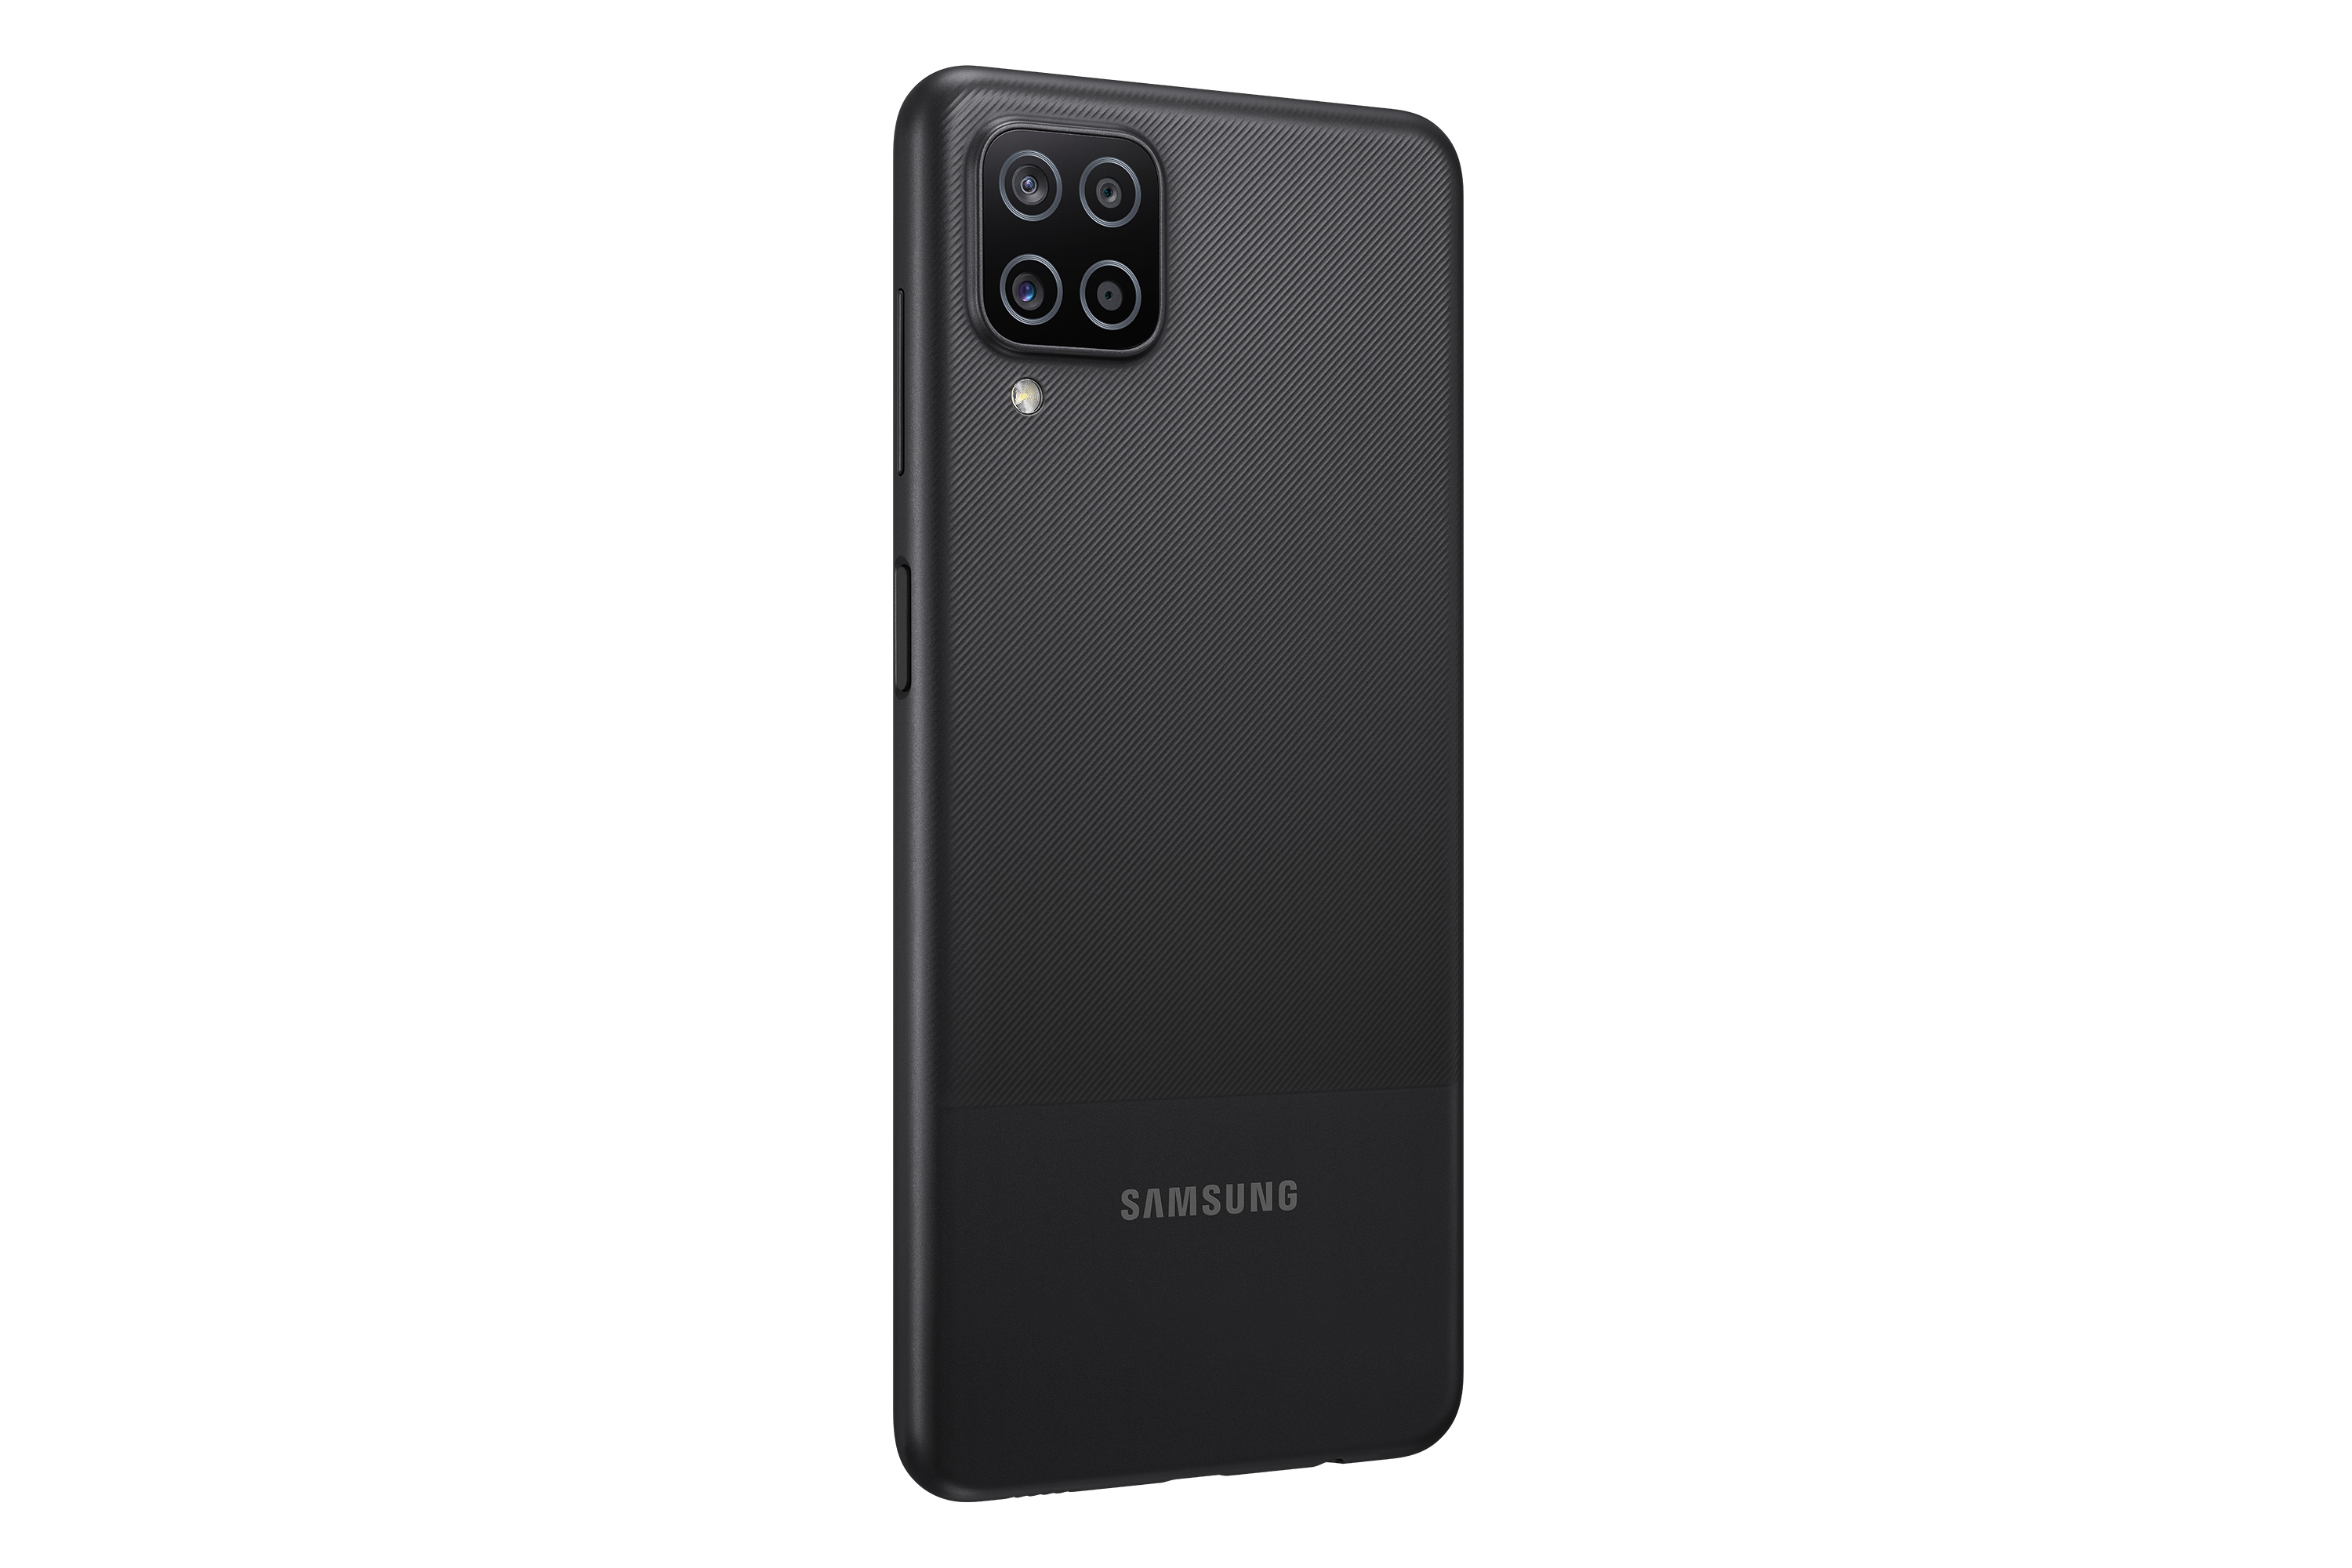 SAMSUNG Galaxy A12 - 32 GB Zwart, Android 10.0, 4G